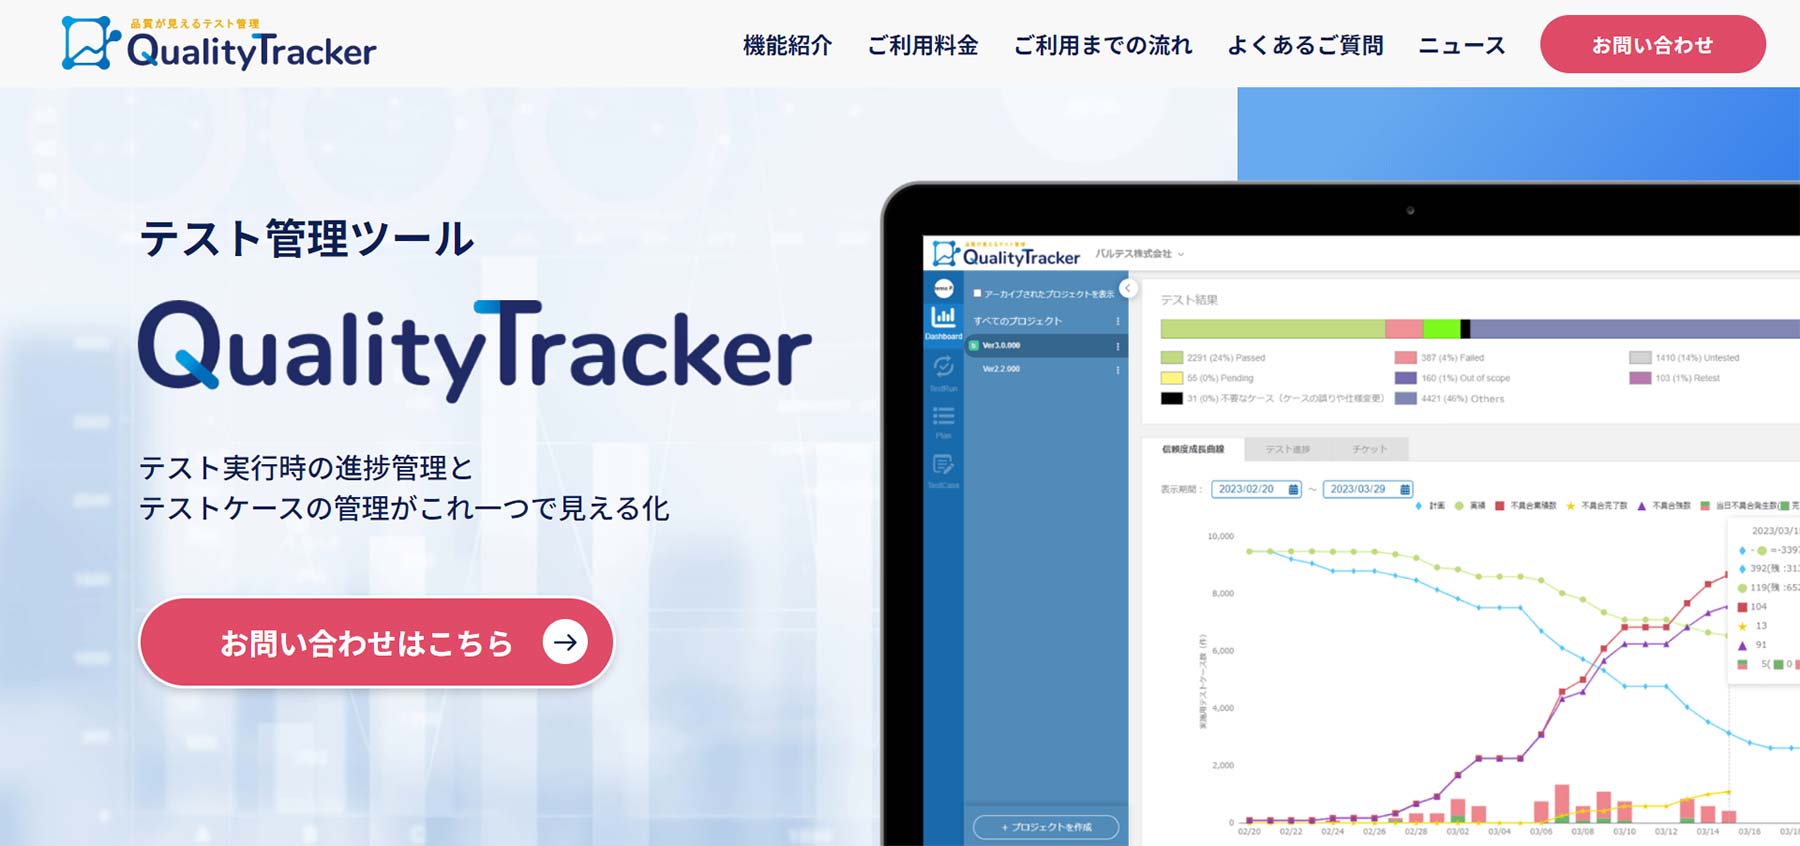 Quality Tracker公式Webサイト